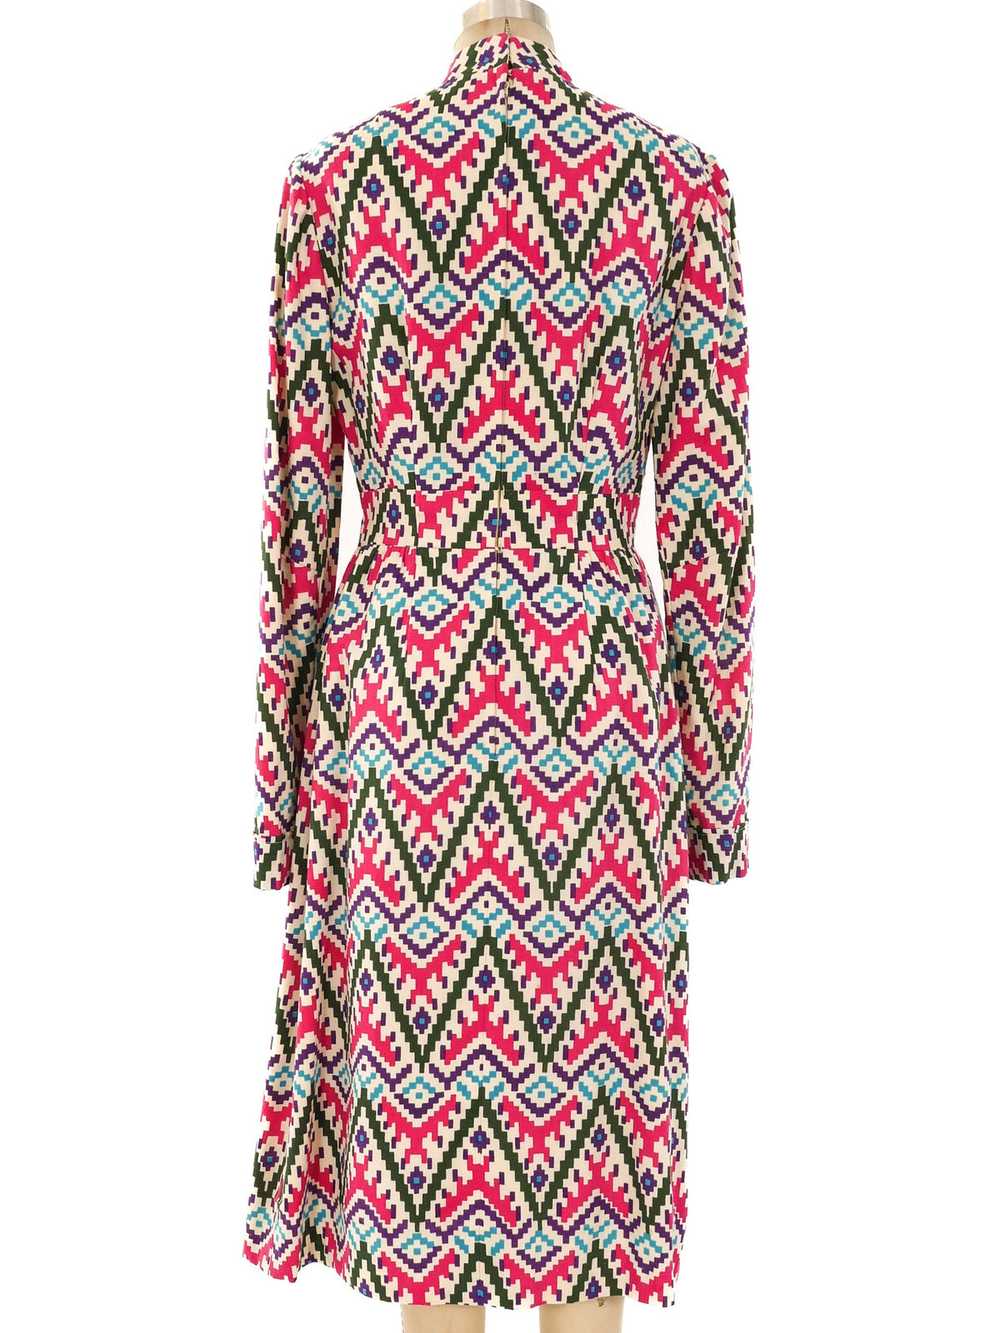 1960's Ikat Printed Wool Dress - image 3